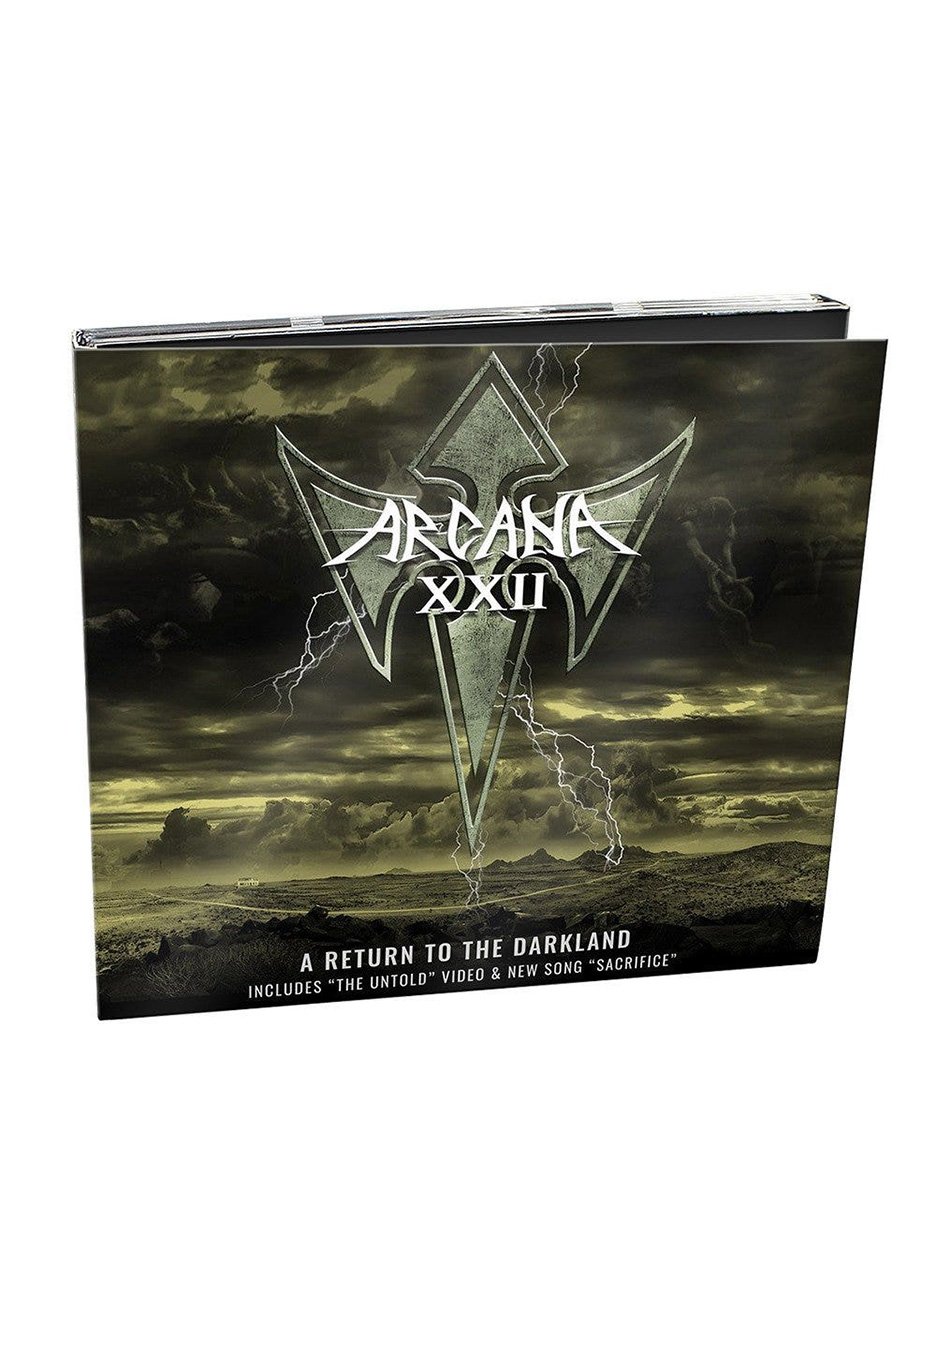 Arcana XXII - A Return To The Darkland / The Untold - Digipak CD + DVD